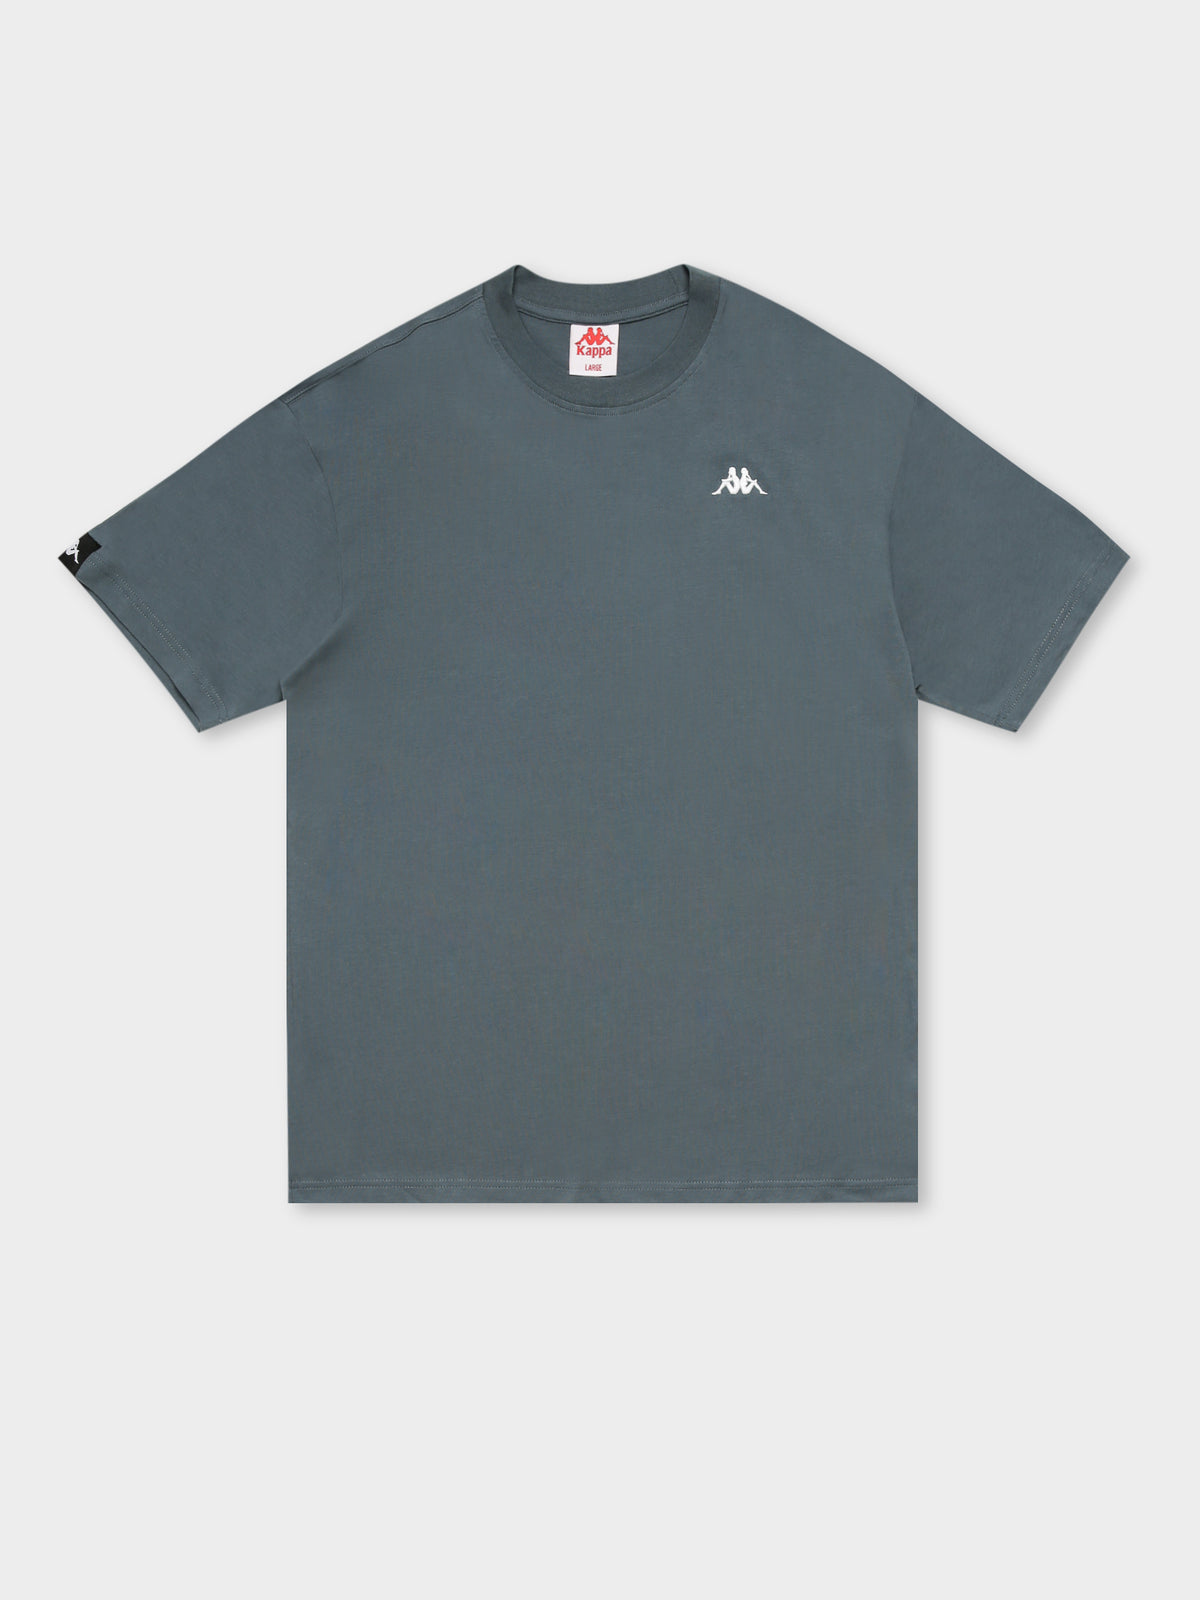 Authentic Senoc T-Shirt in Dark Grey